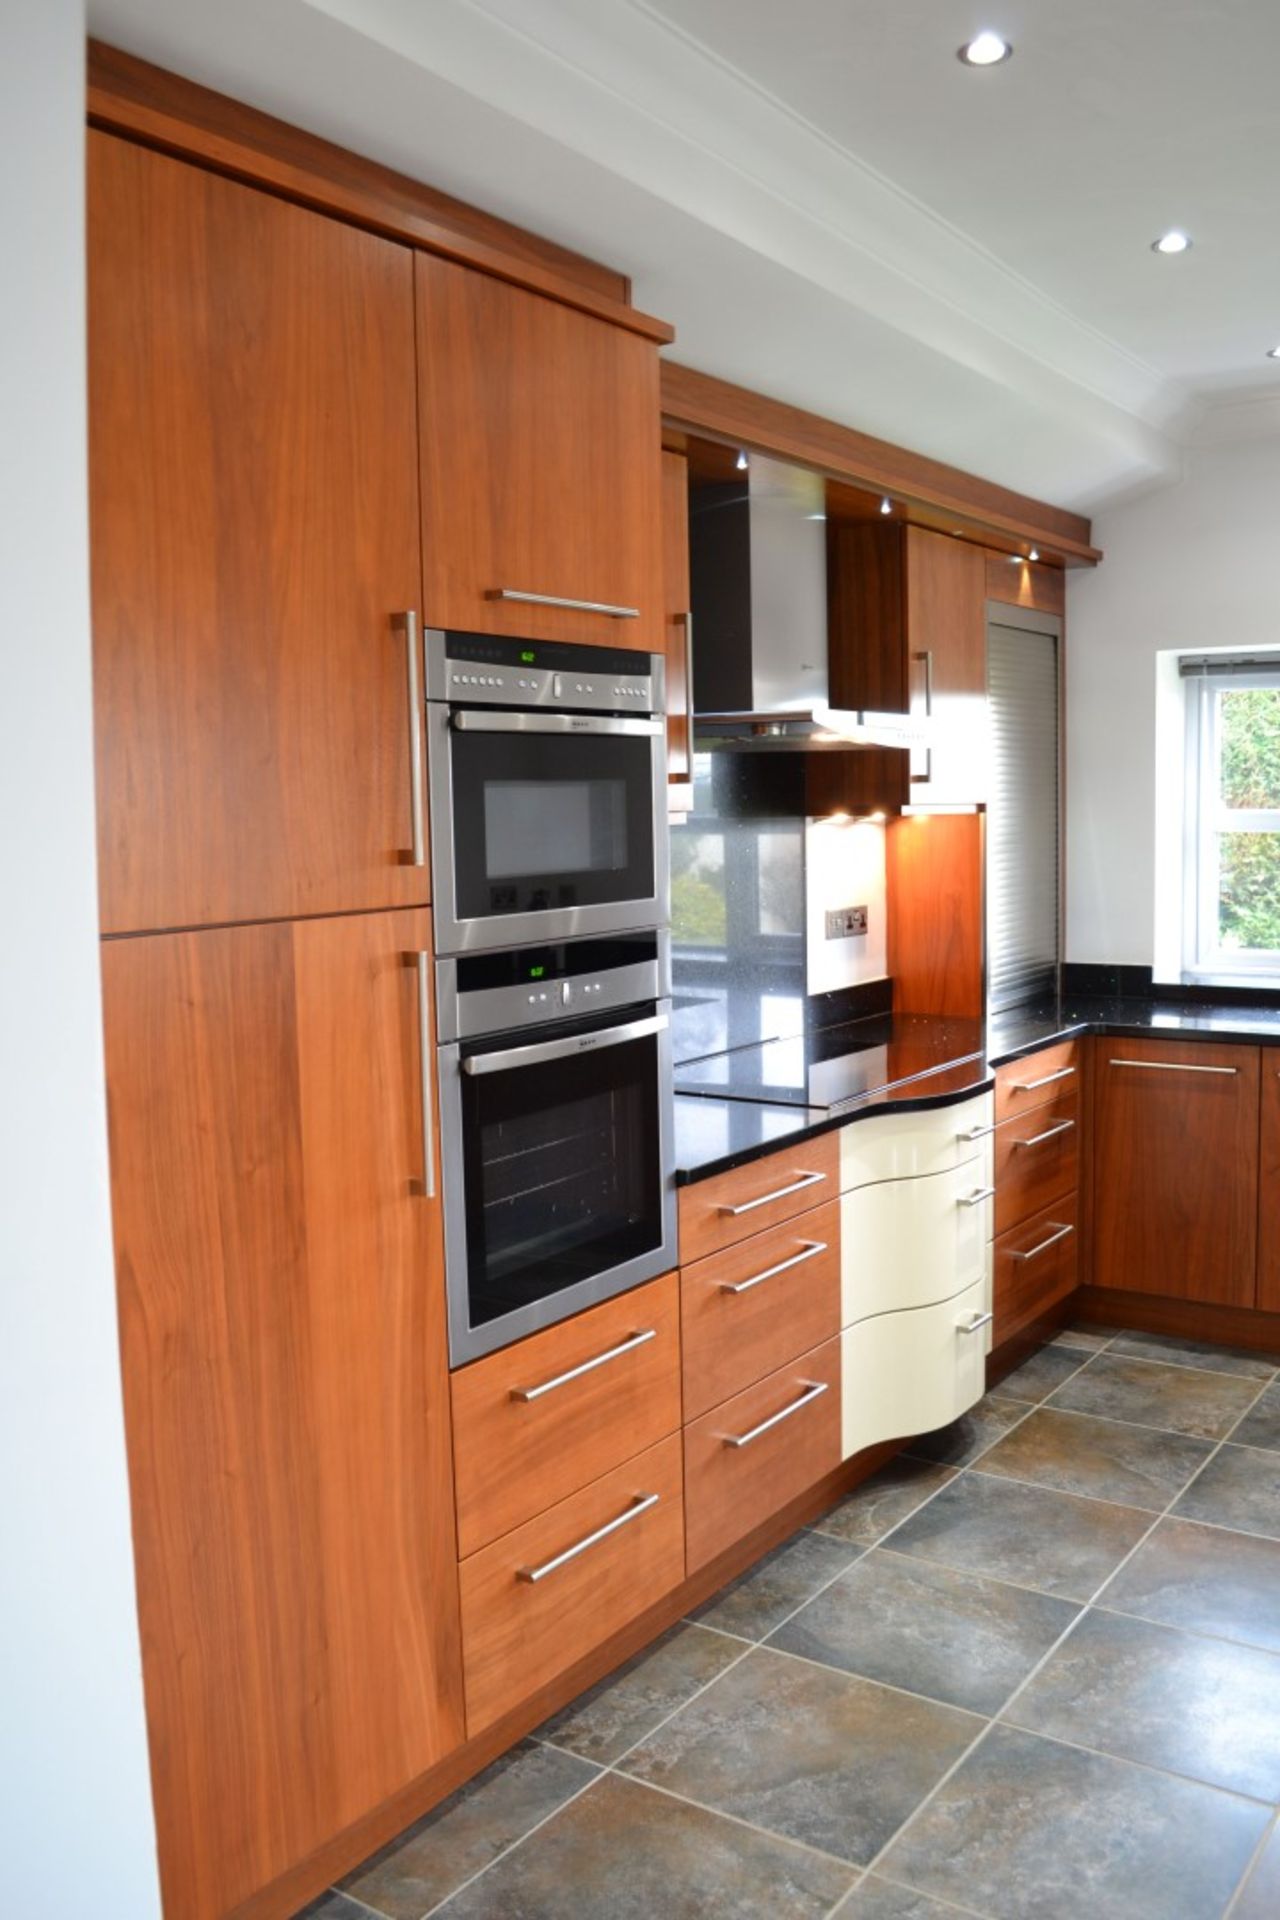 1 x Kitchen Design Bespoke Fitted Kitchen With Silestone Worktops & Neff Appliances - Superb - Image 7 of 59